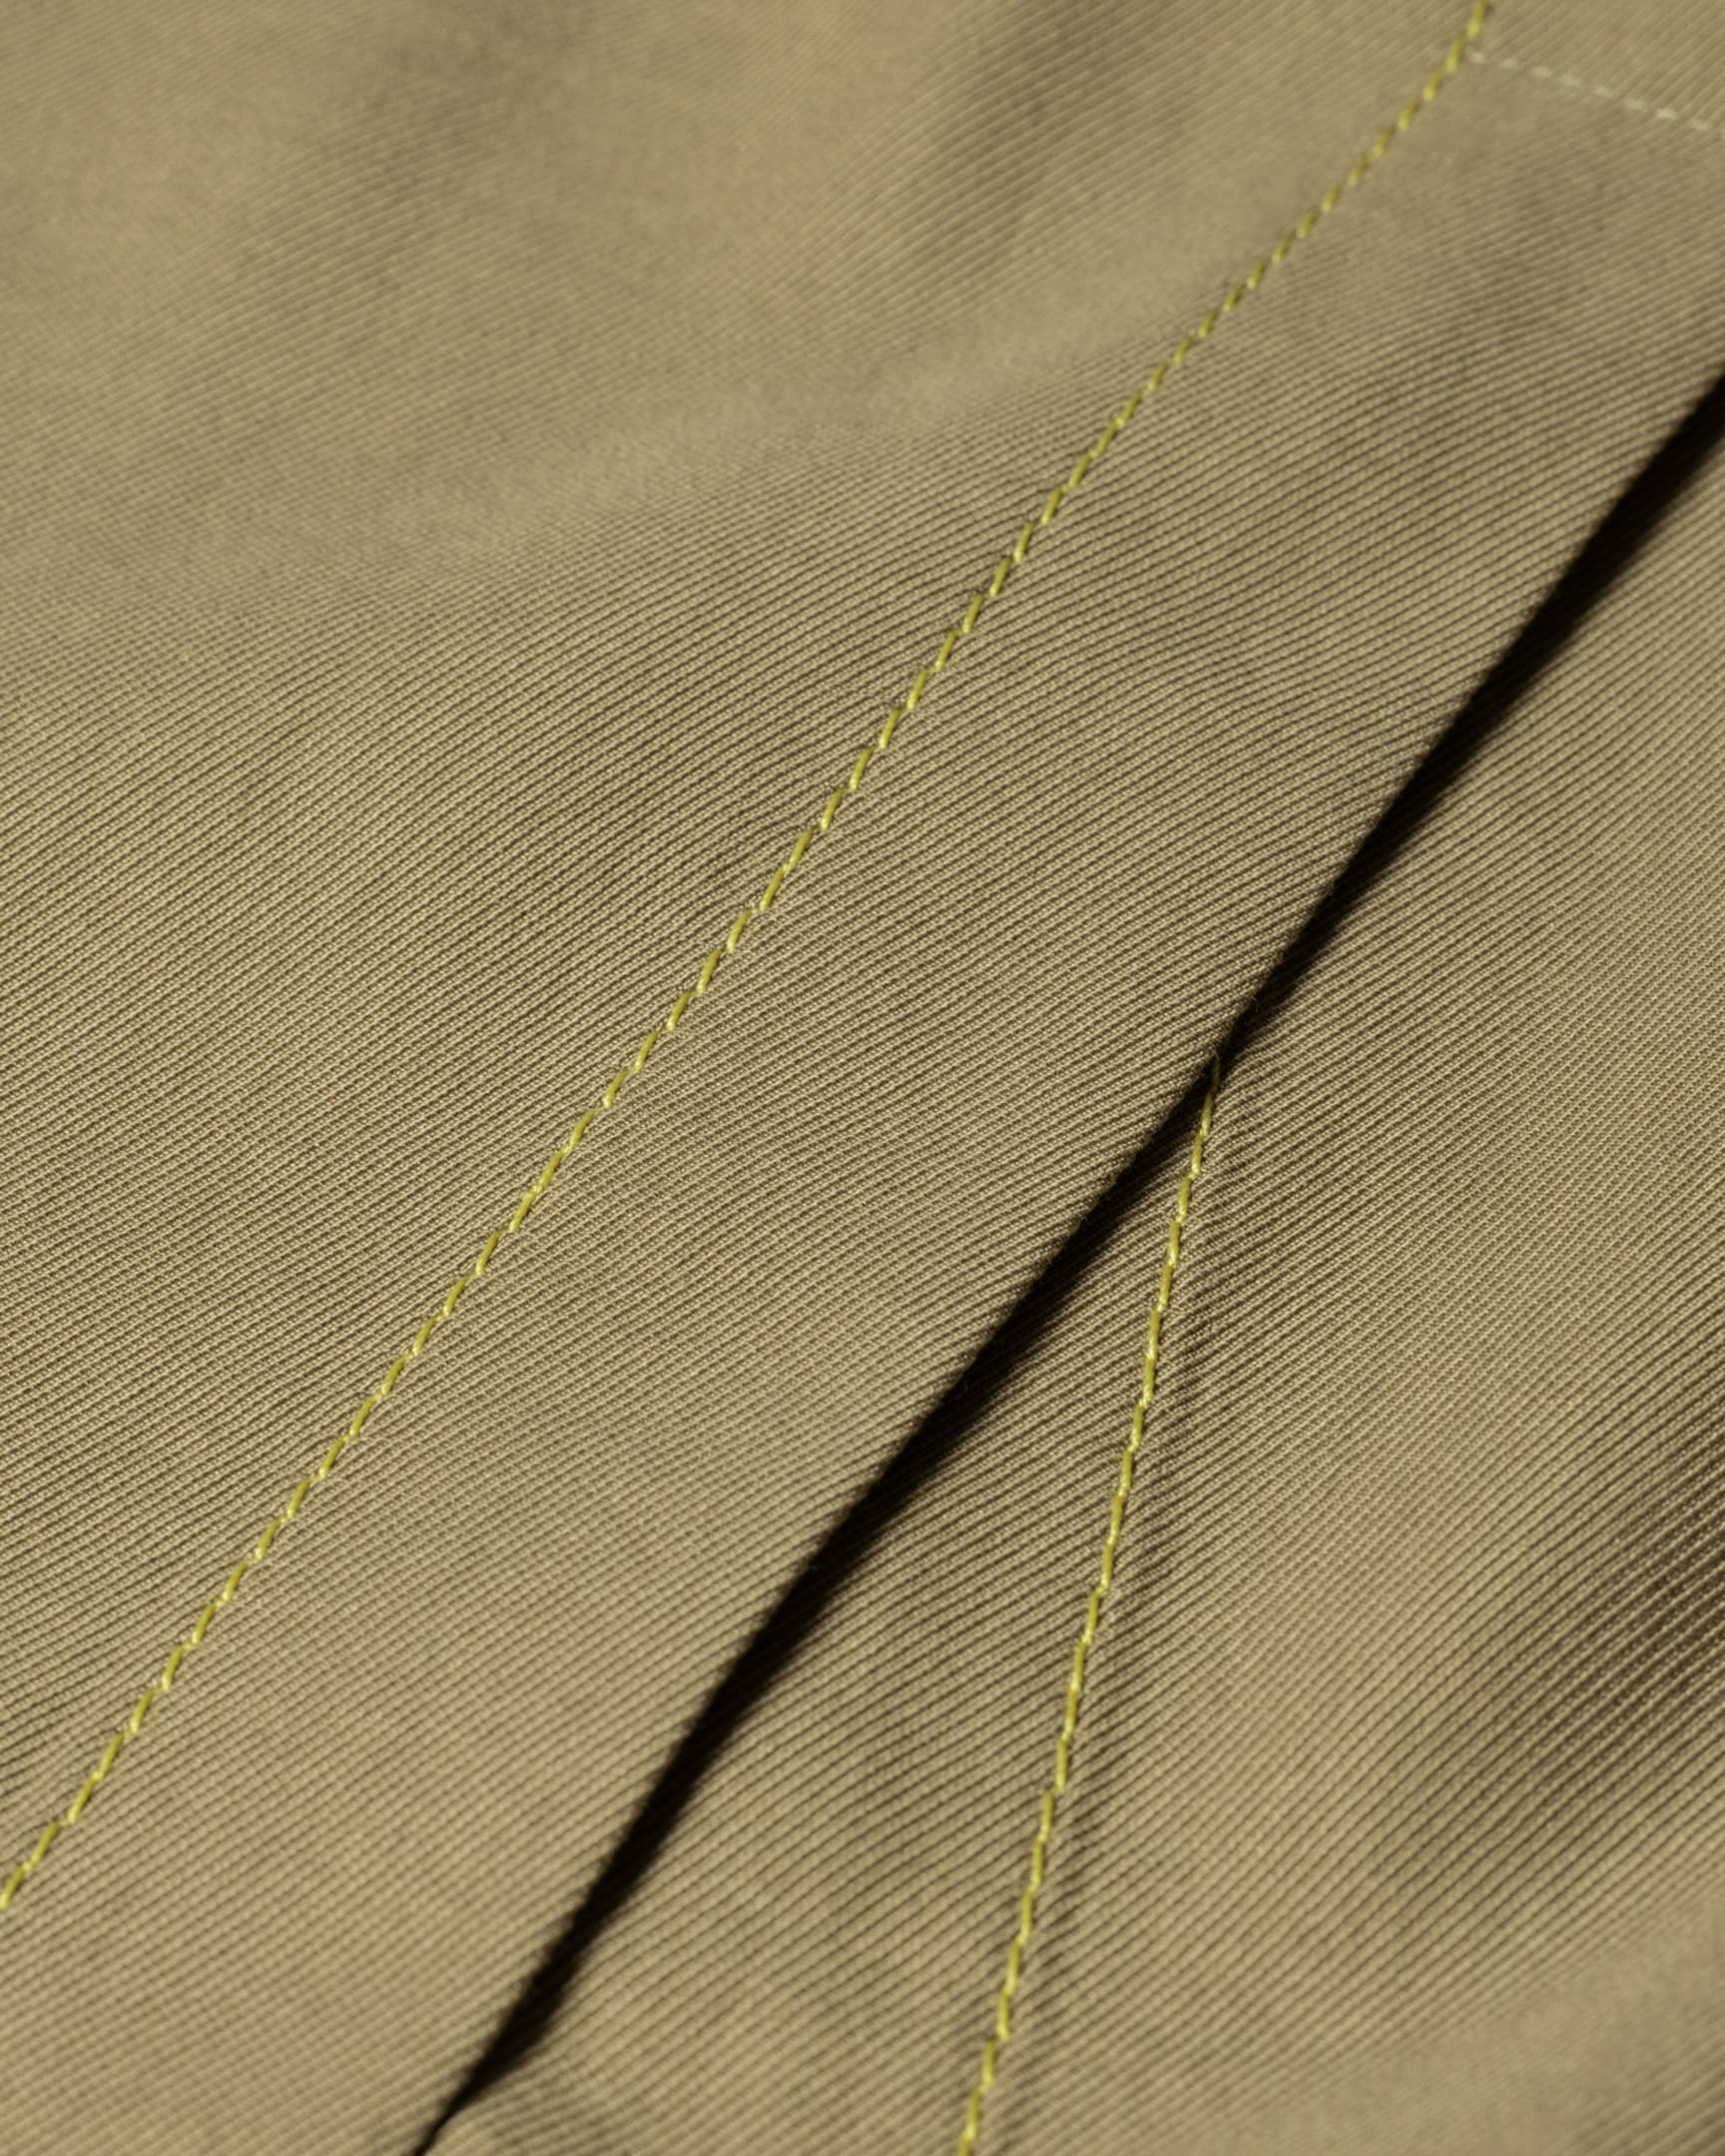 Detail View - Women's Khaki Trench Coat Paul Smith